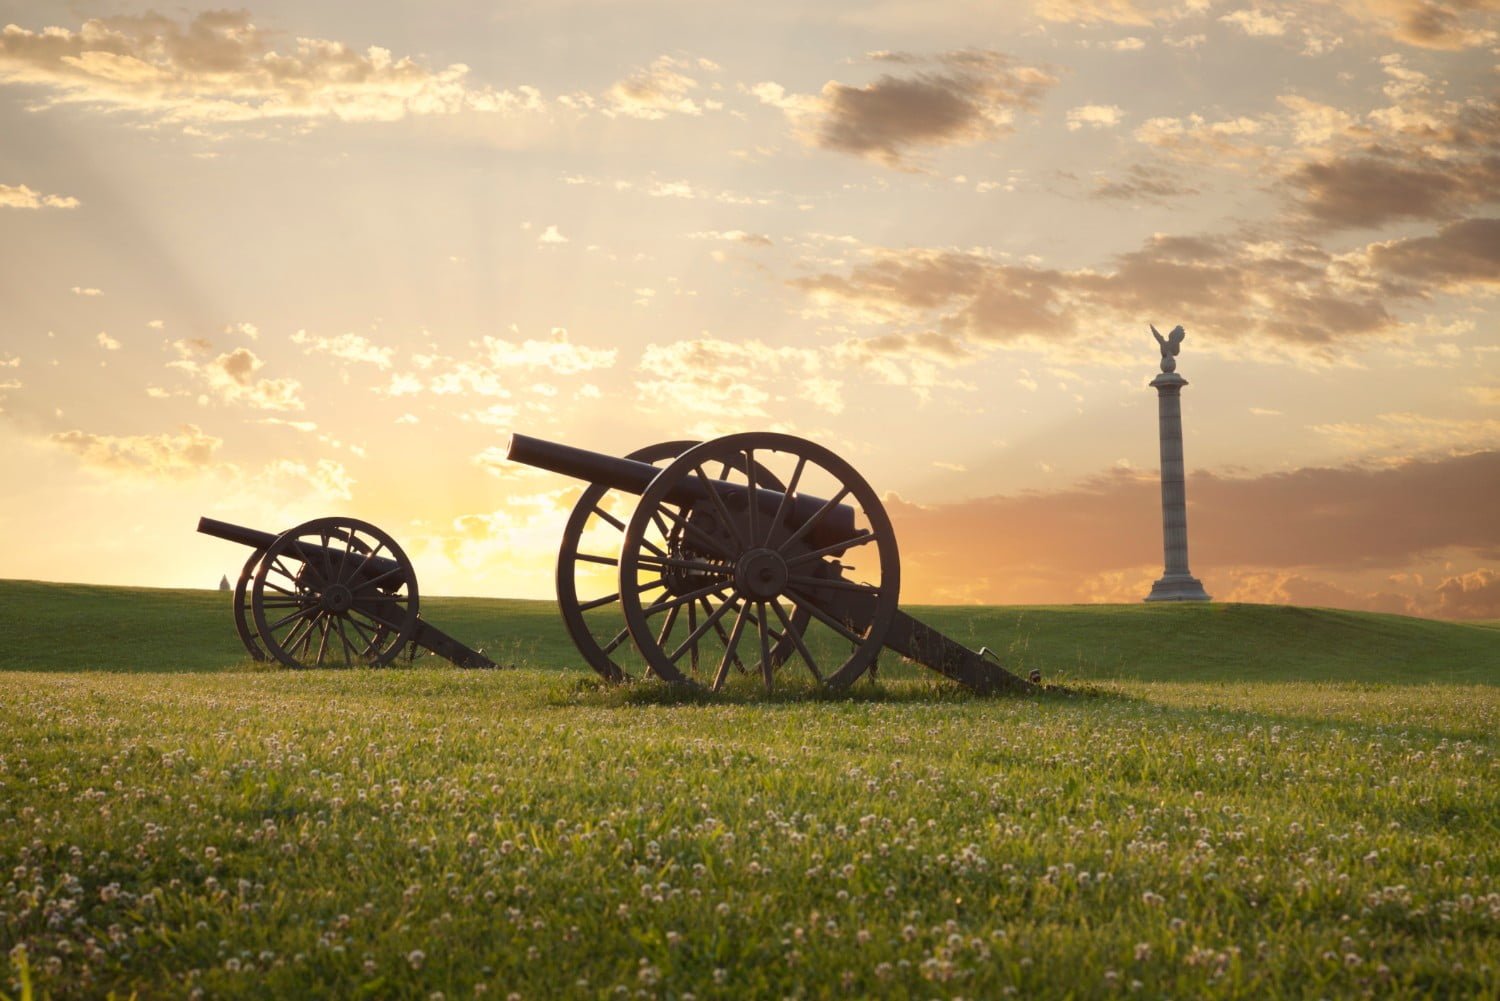 Sunset behind Civil War canons